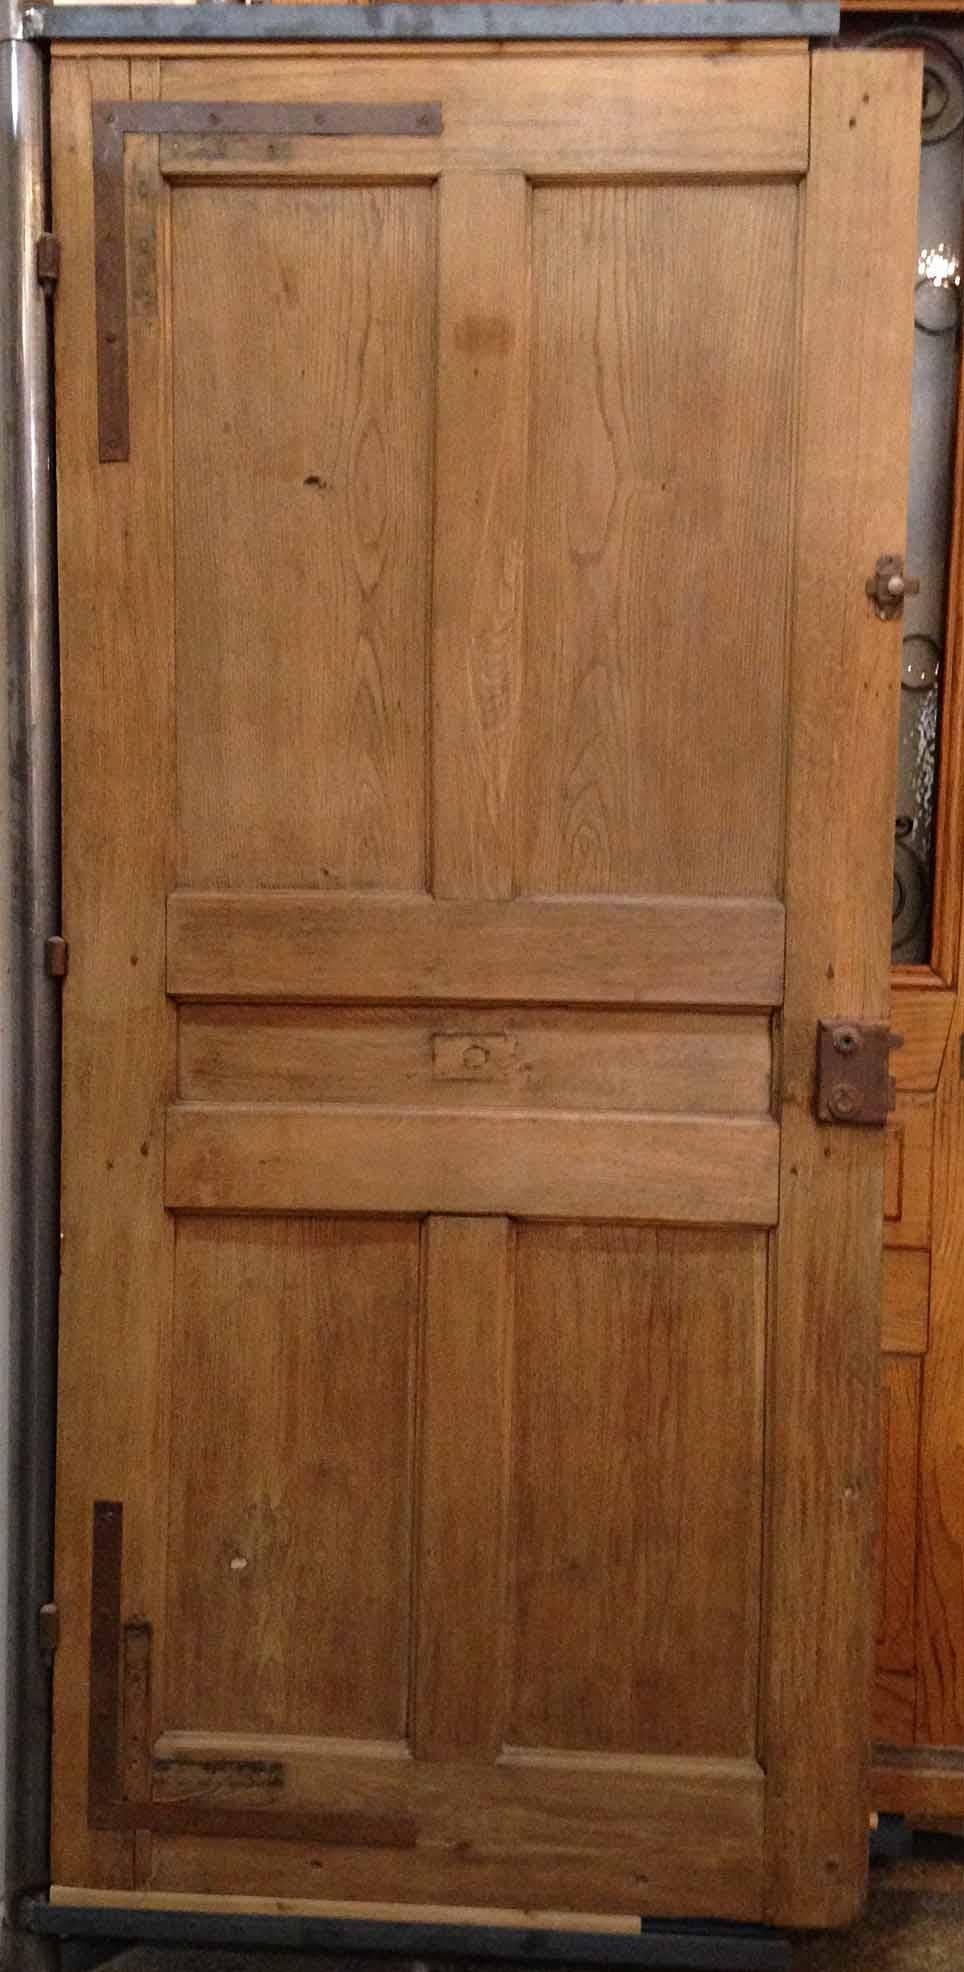 Antique French single door

Origin: France

circa 1860

Measurements: 39